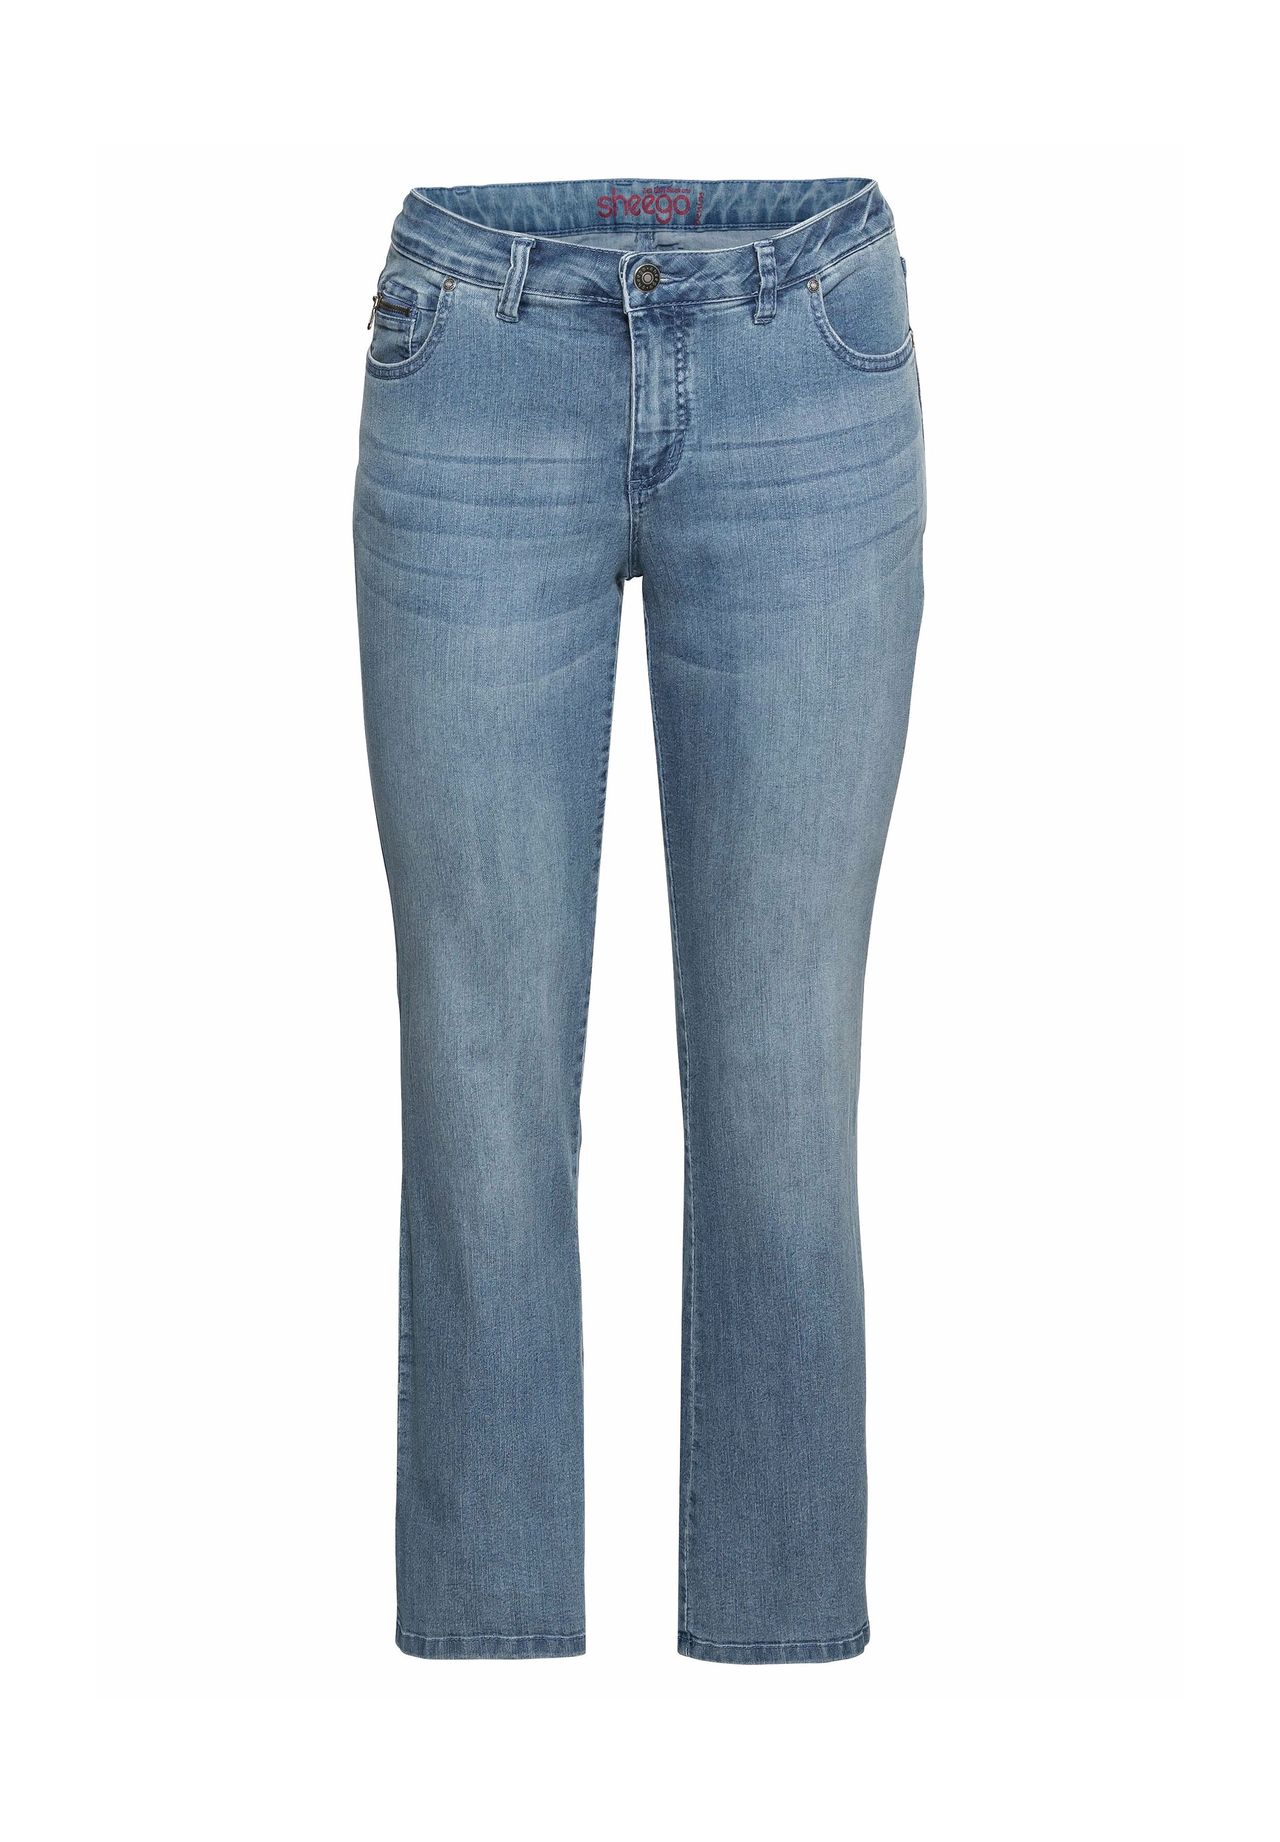 sheego Jeans in GALERIA mit Used-Effekten | 5-Pocket-Form